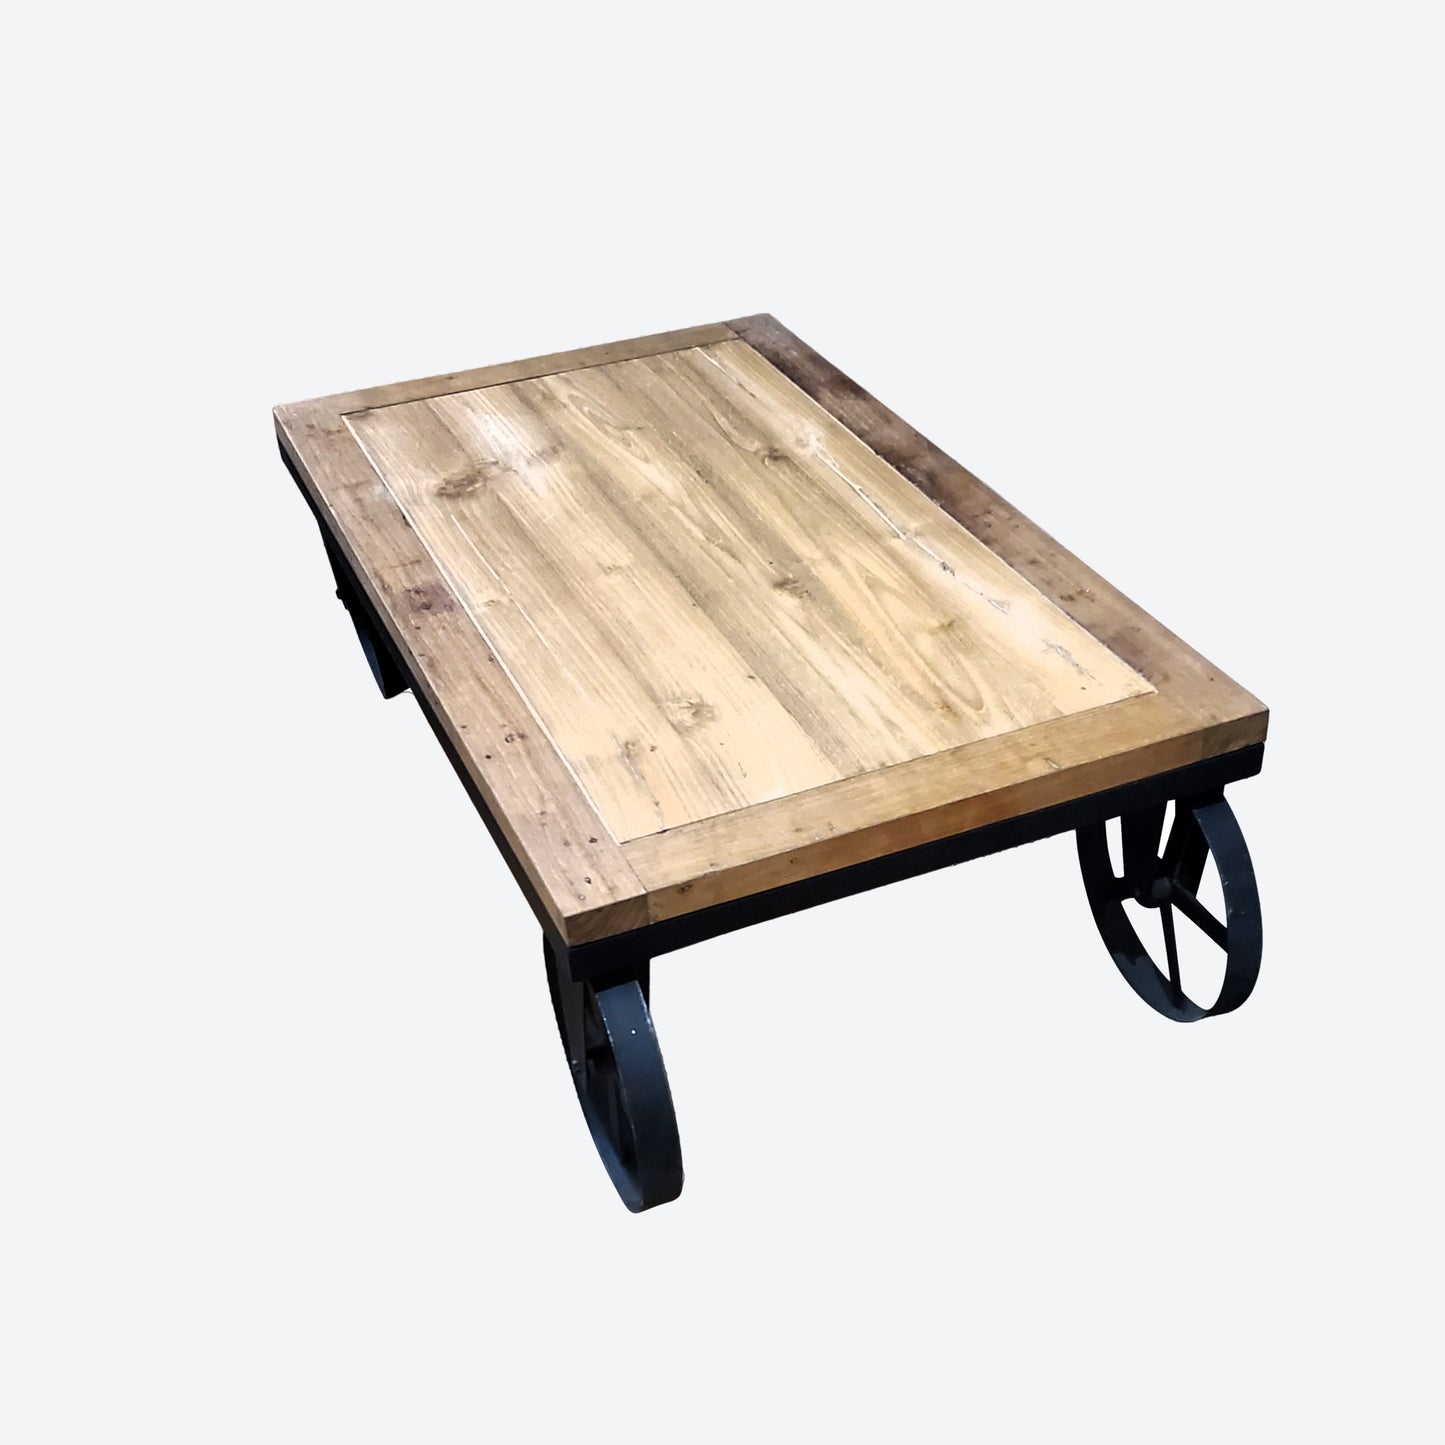 Cedar Wood Coffee Table With Wheels -SK- SKU 1174